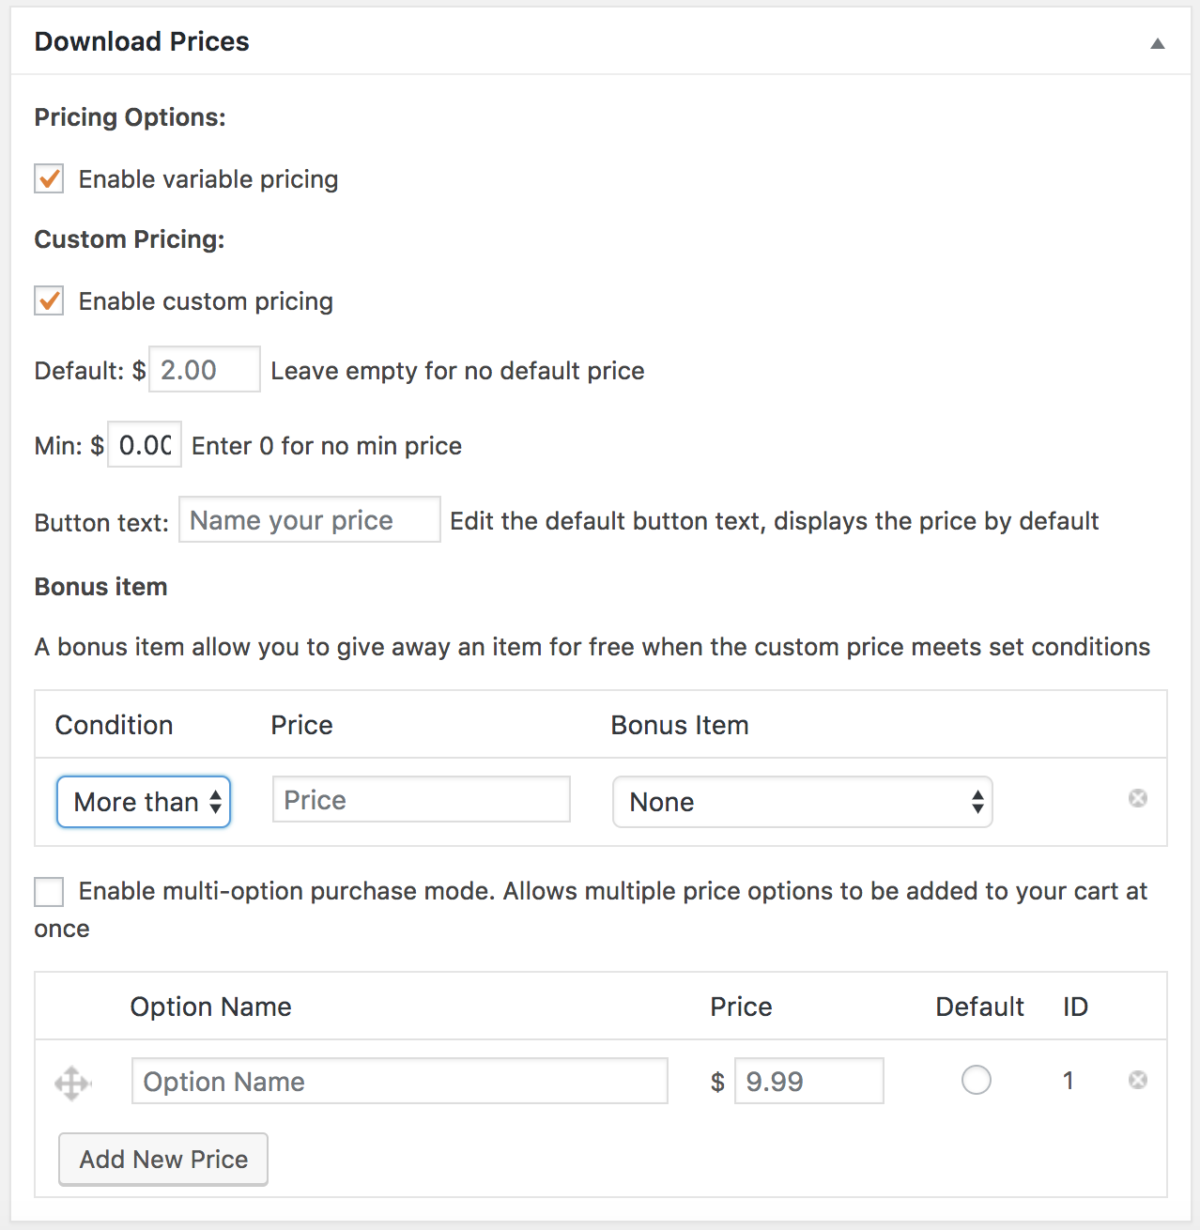 Custom Prices – Easy Digital Downloads